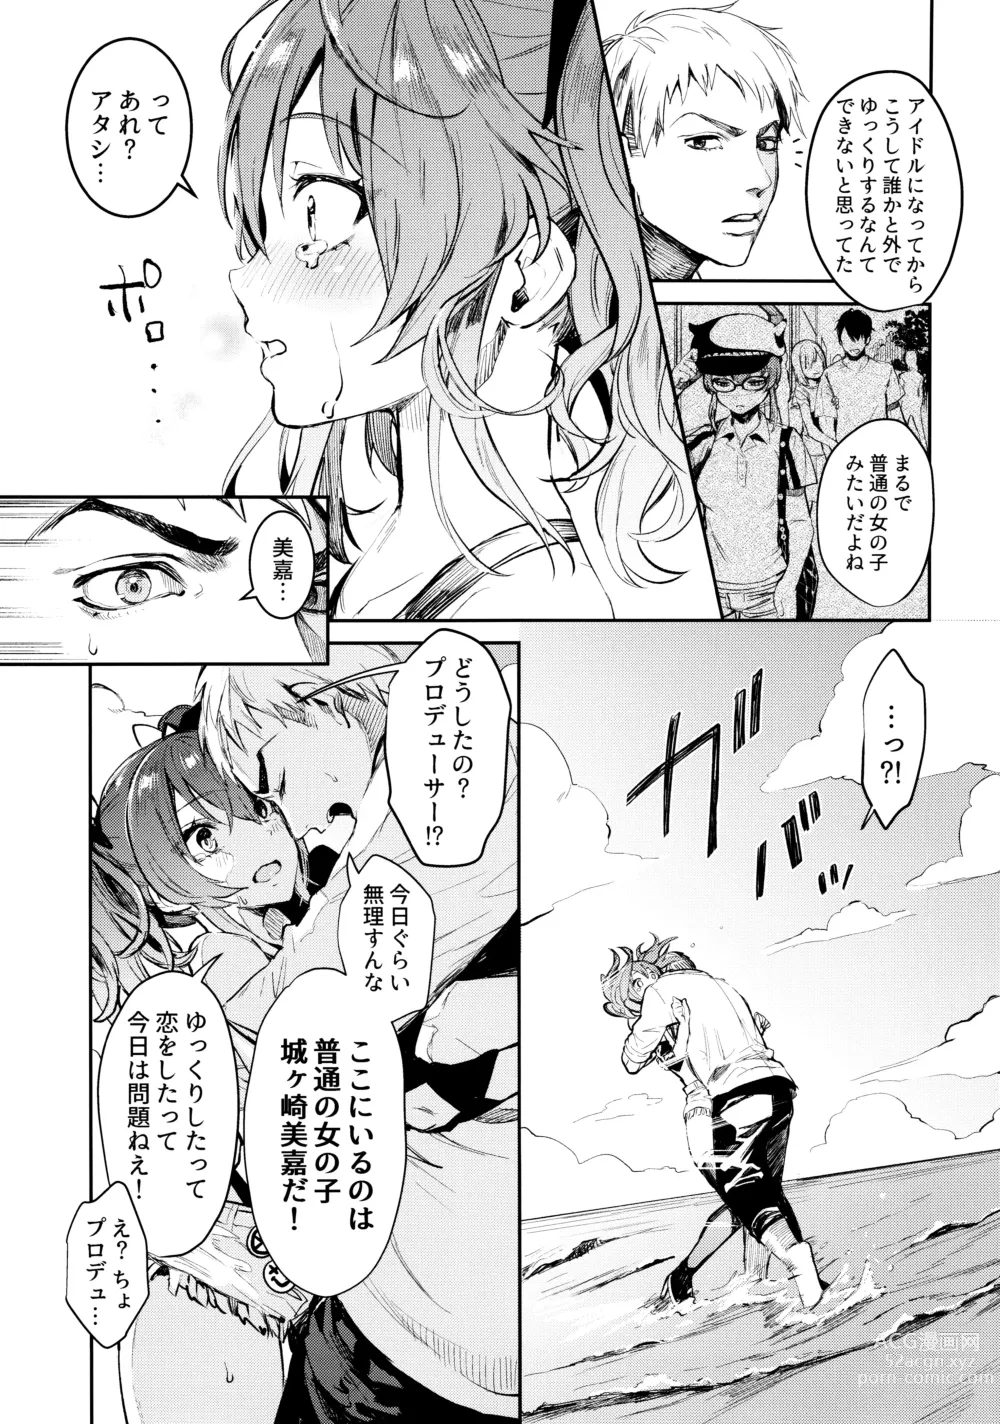 Page 8 of doujinshi Mika to Futari de.